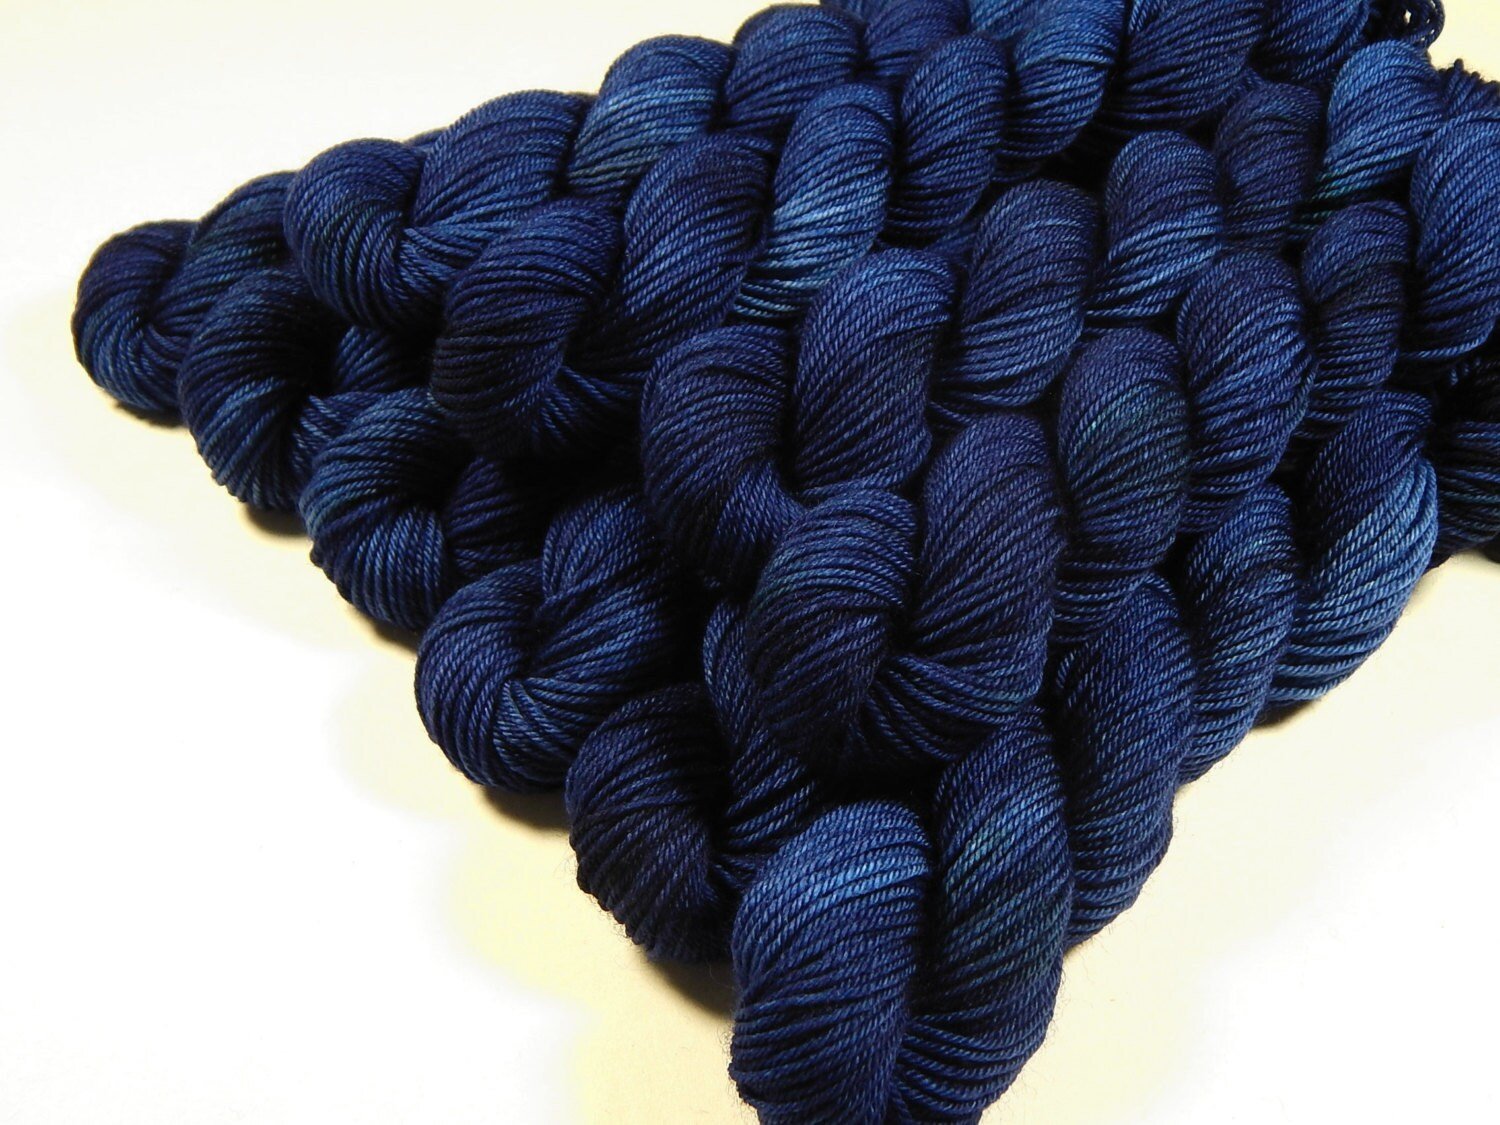 Yarn Mini Skeins, Hand Dyed Yarn, Sock Weight 4 Ply Superwash Merino Wool - Ink Tonal - Navy Blue Fingering Weight Yarn, Indie Dyer Yarns